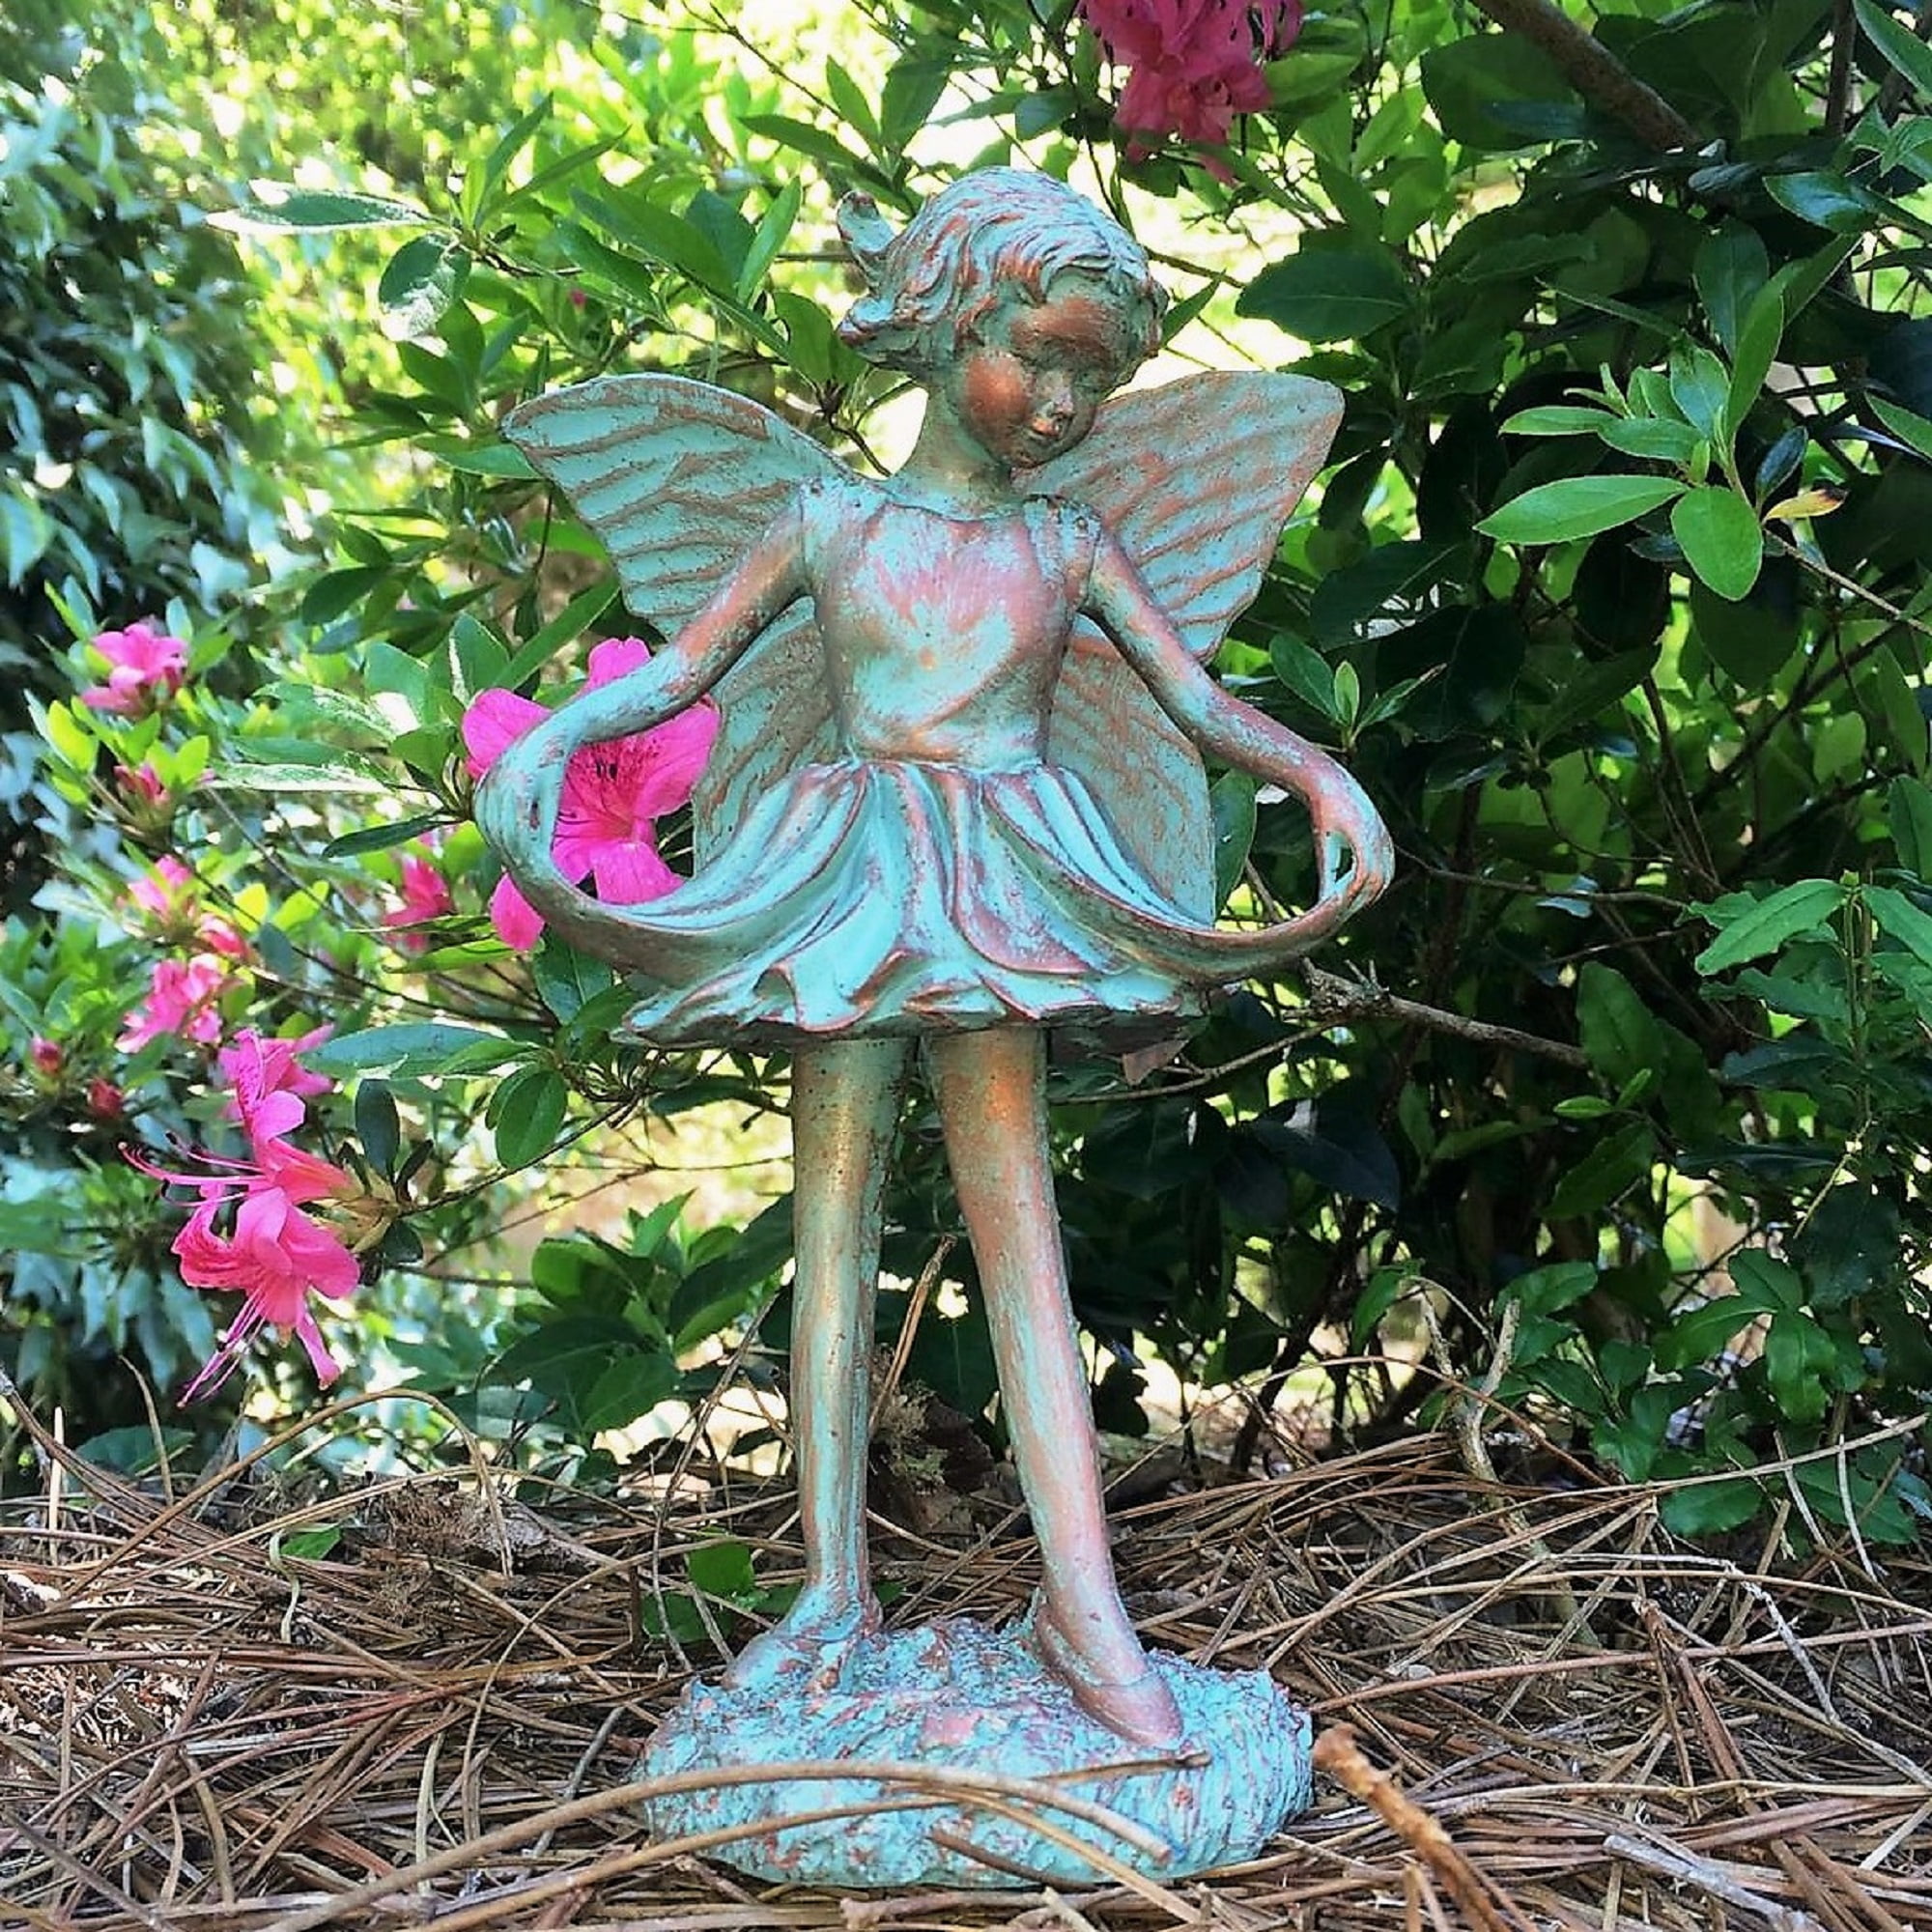 Teresa's Collections 13.2 Large Garden Fairy Outdoor Statue